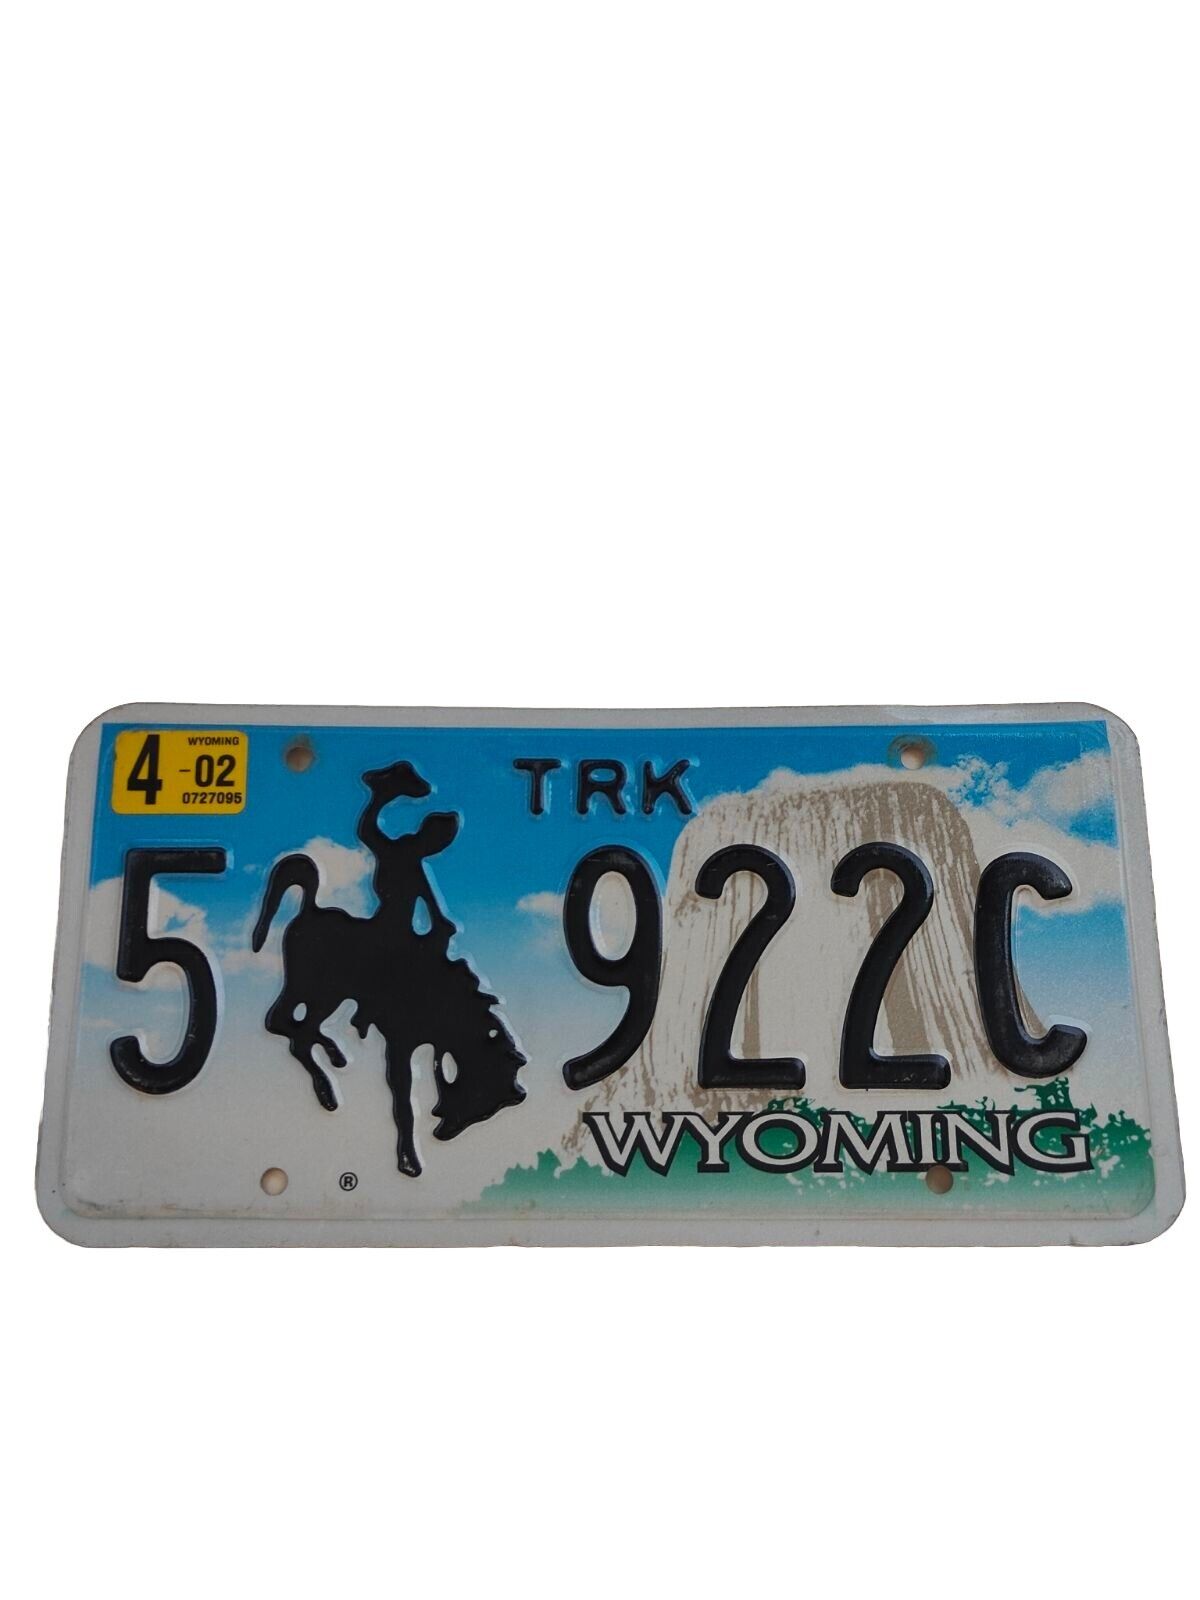 '02 Wyoming Truck License Plate Cowboy Horse Blue Sky 5🏇922C Mancave Pub Garage